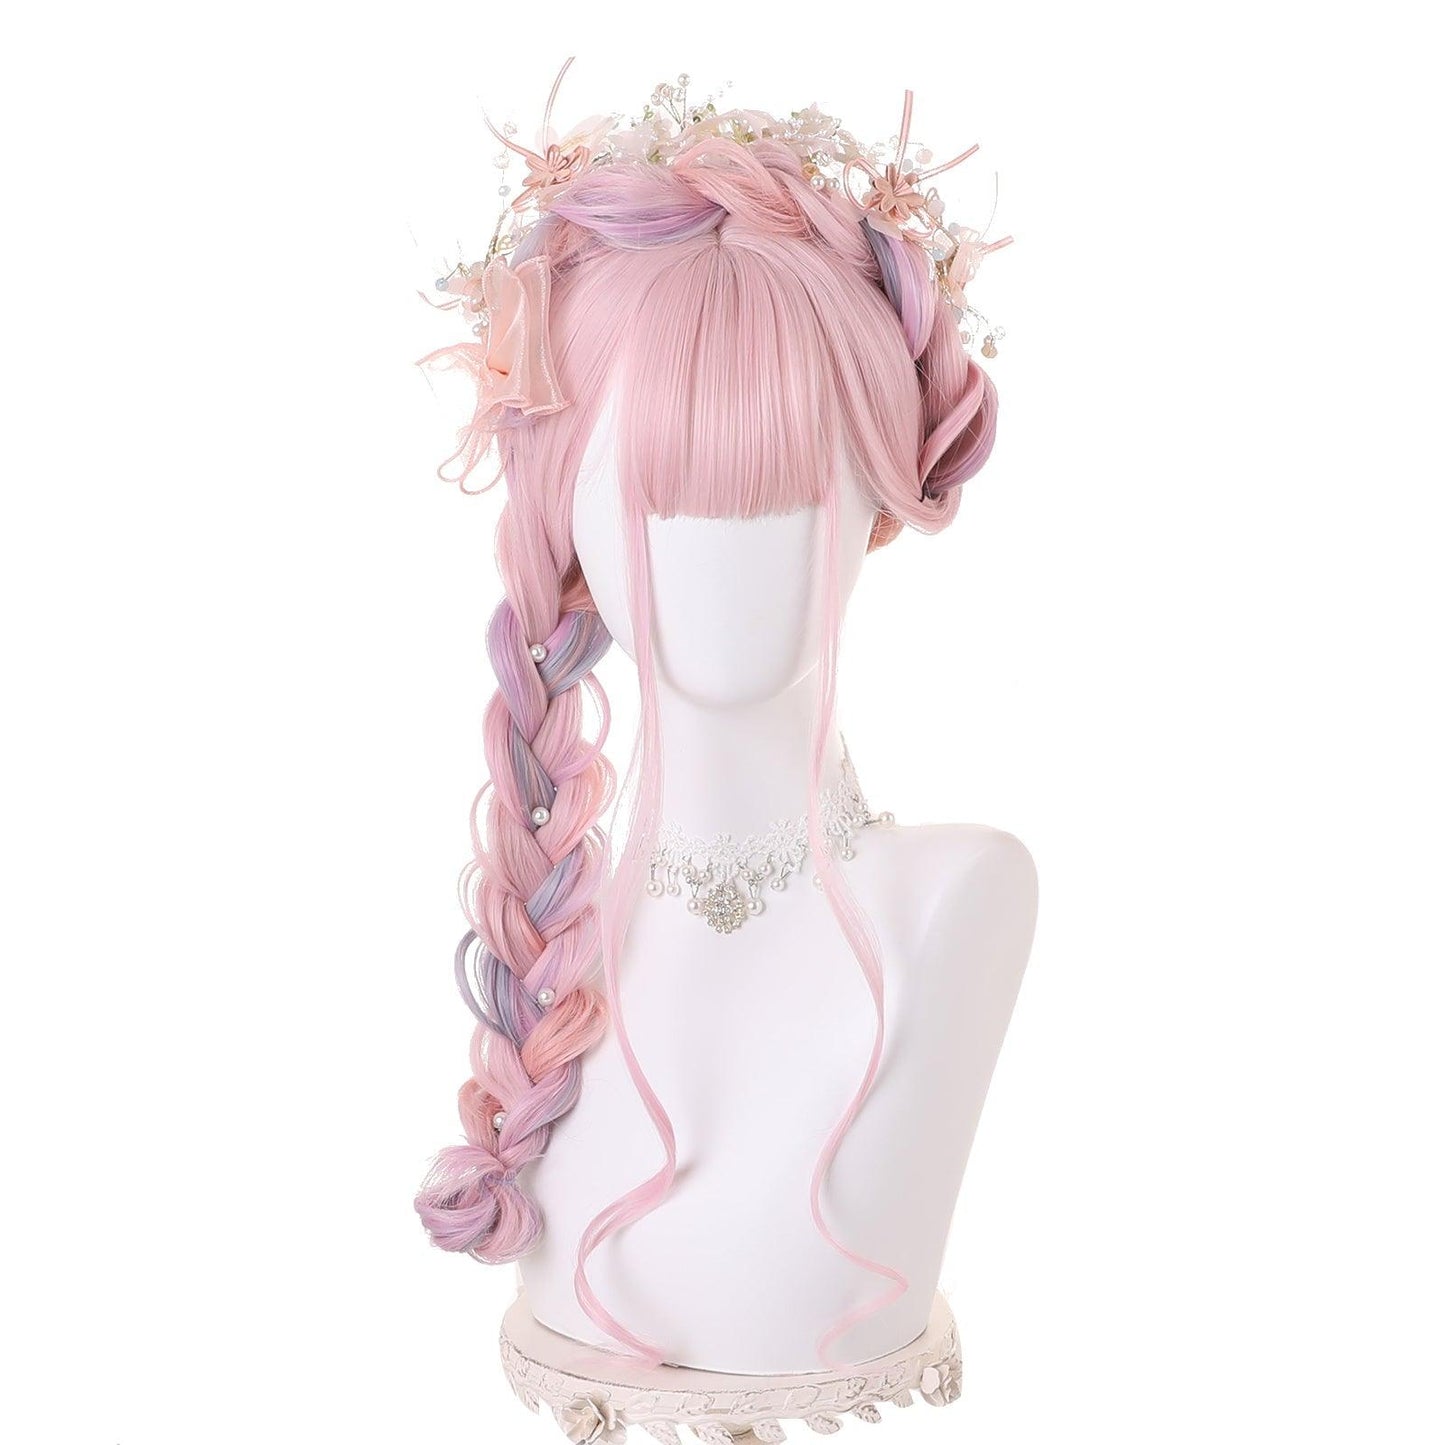 coscrew Rainbow Candy Wigs Pink Long Lolita Wig LOLI-022 - coscrew